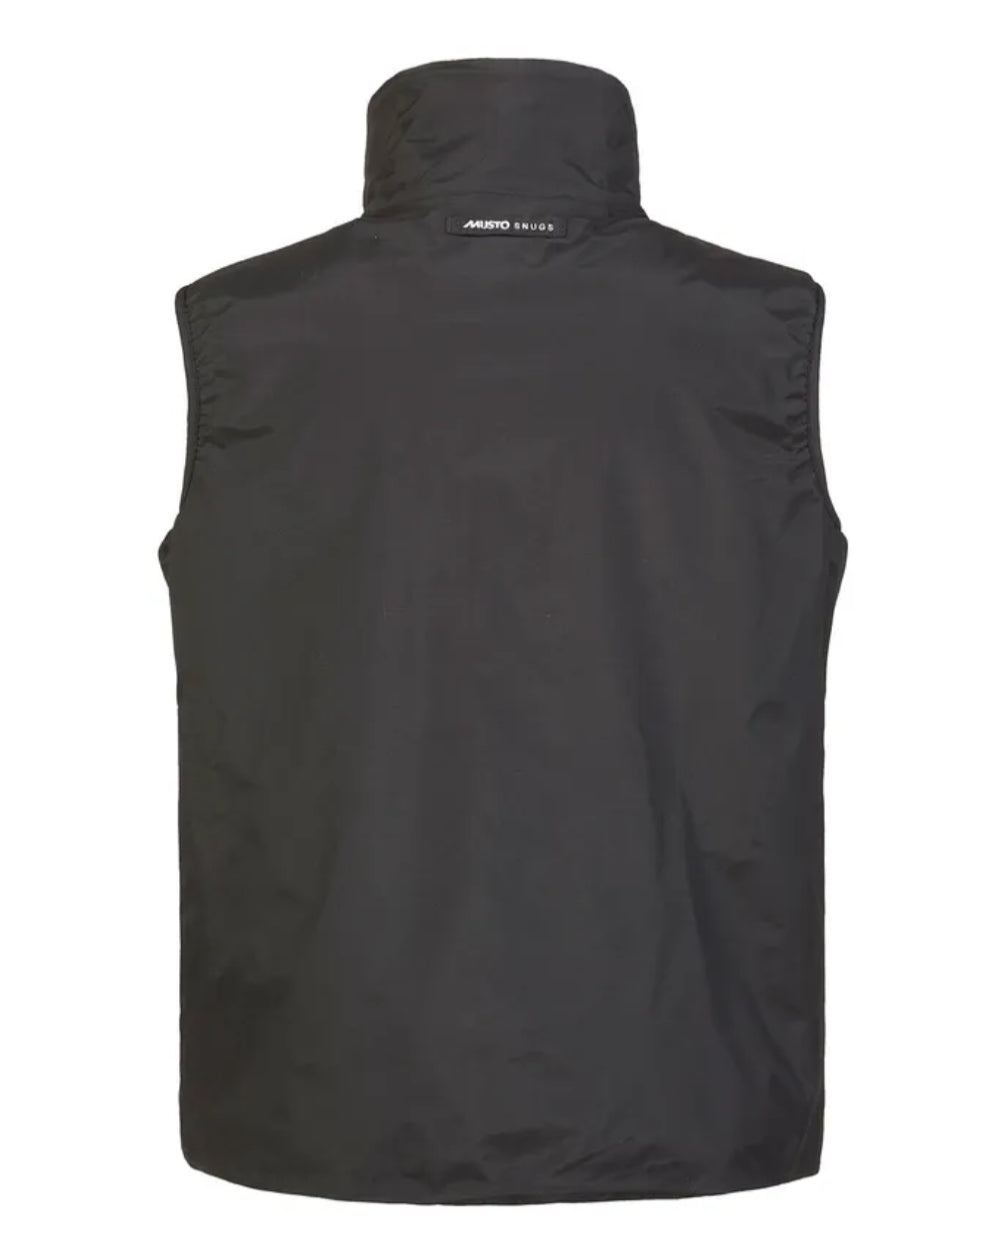 Black coloured Musto Snug Vest 2.0 On A White Background 